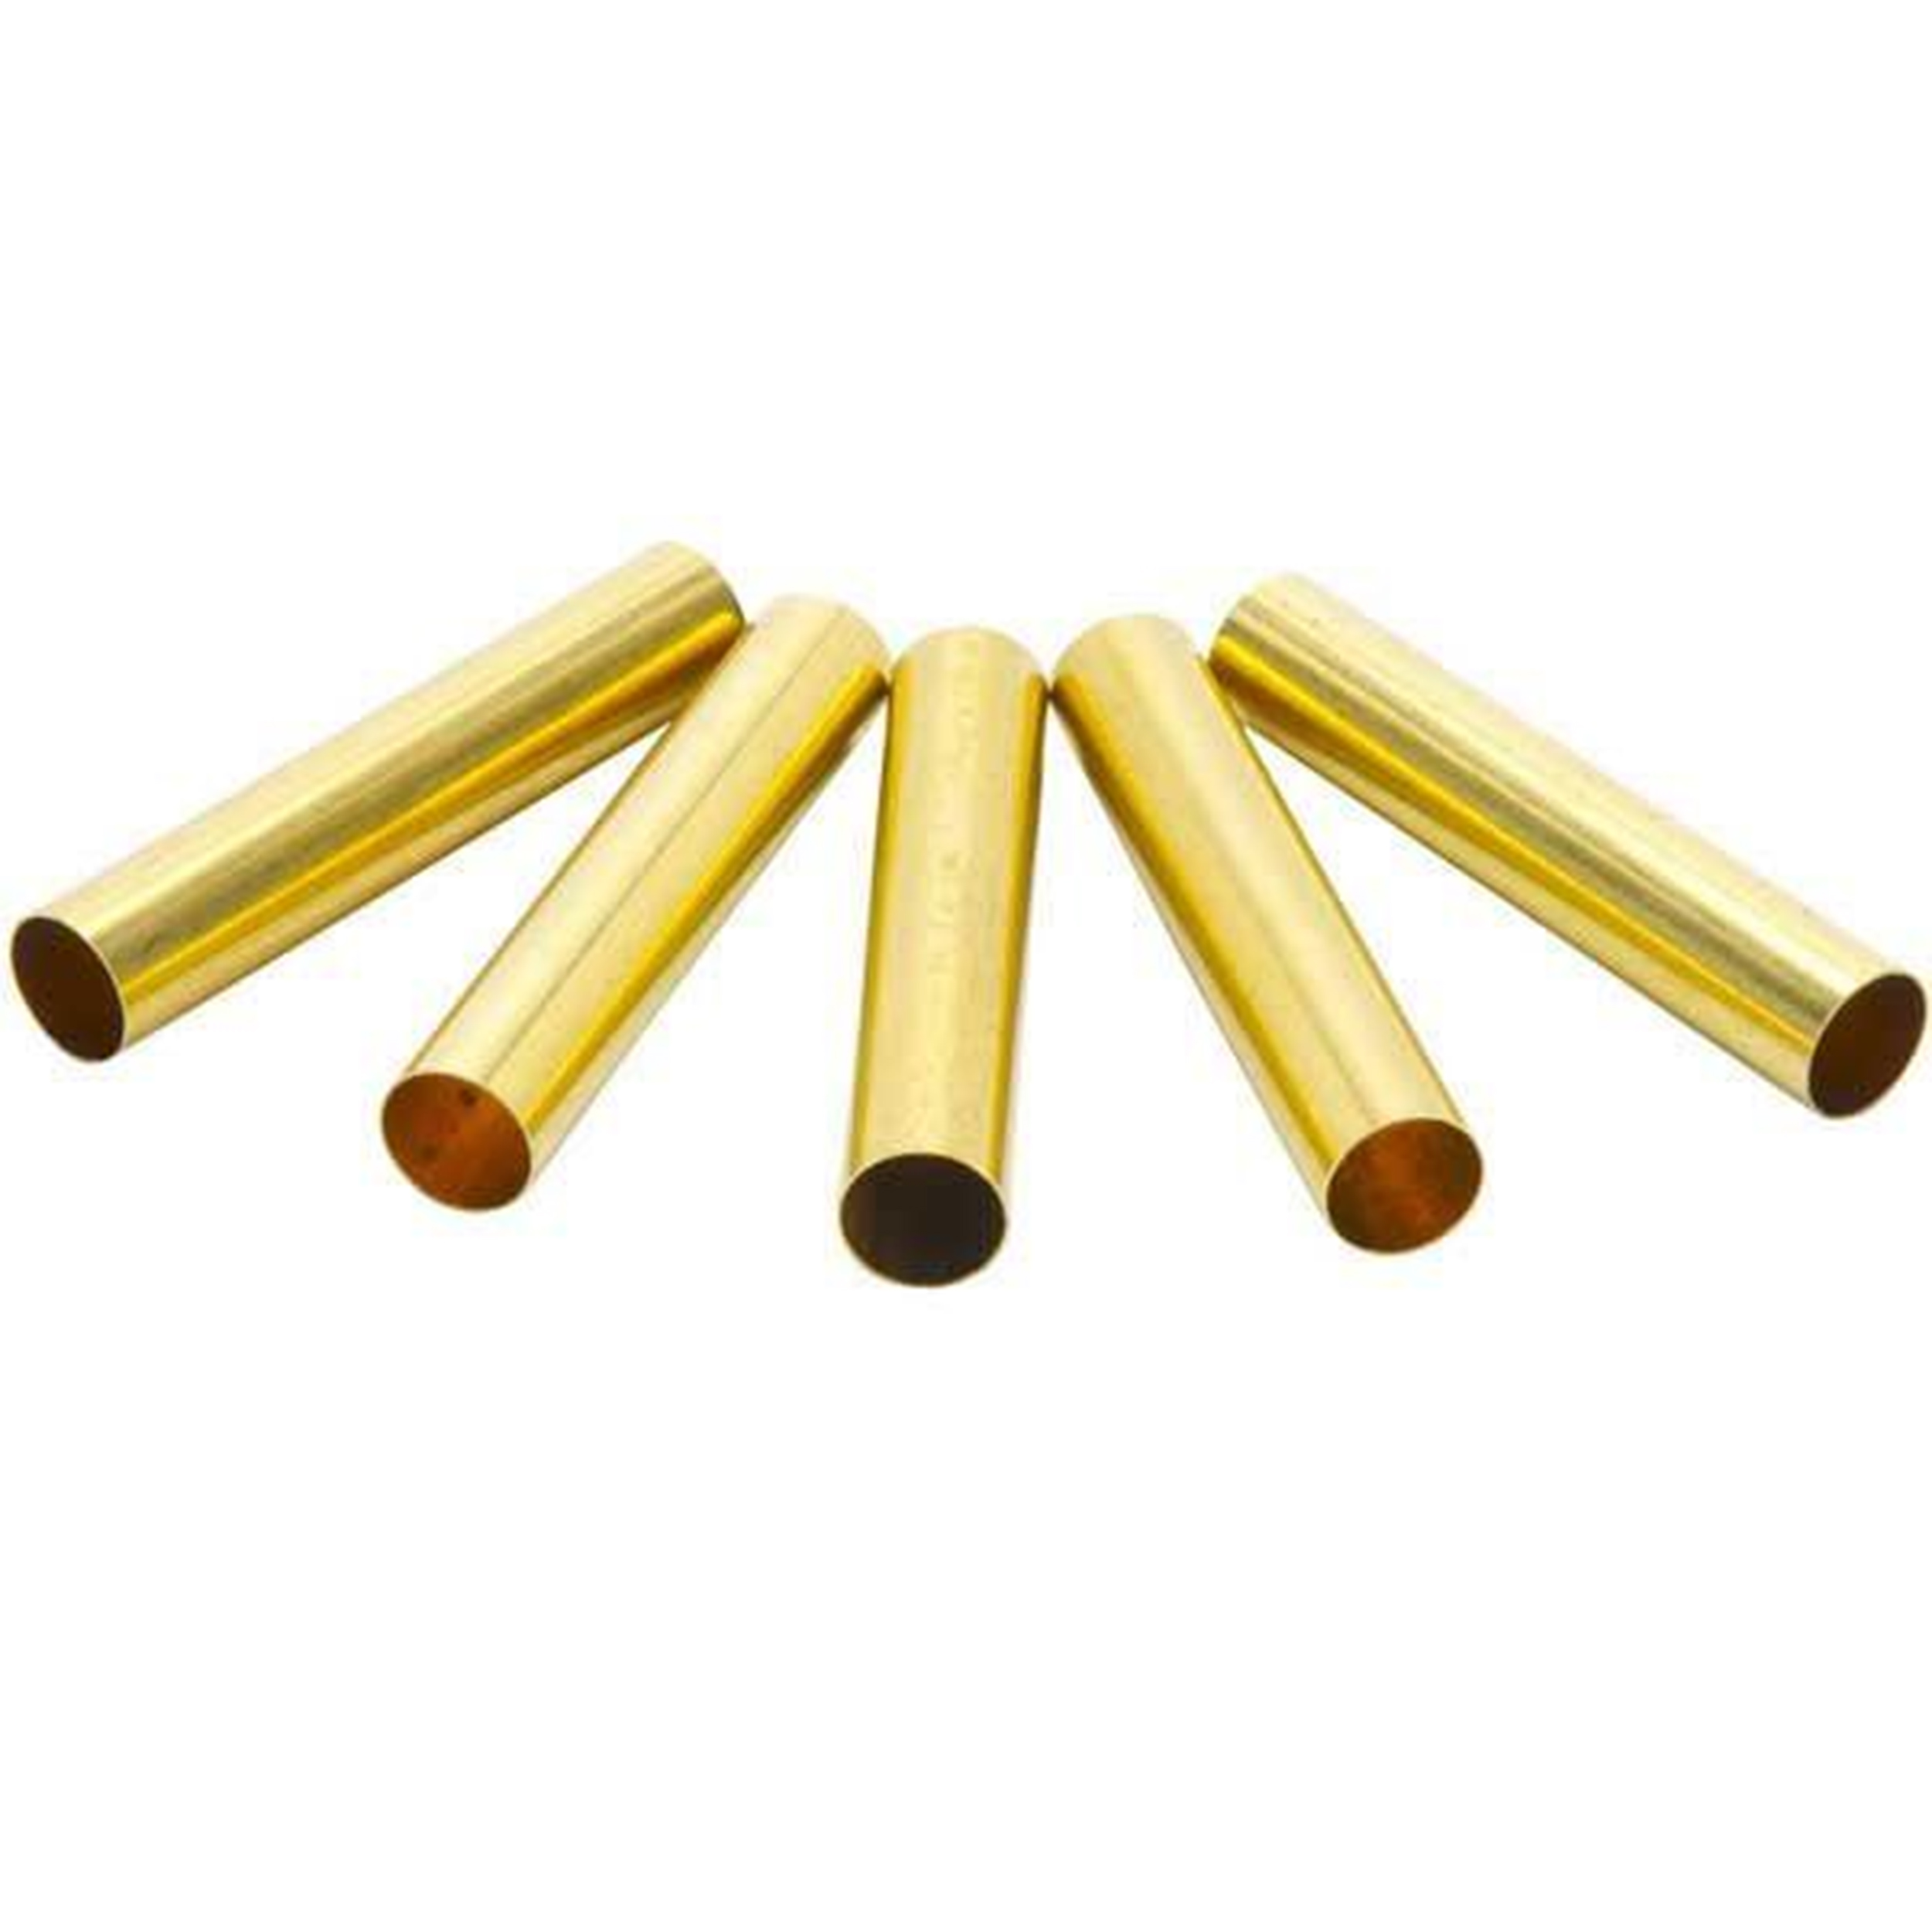 Replacement Tubes For Cartridge Bullet Pen